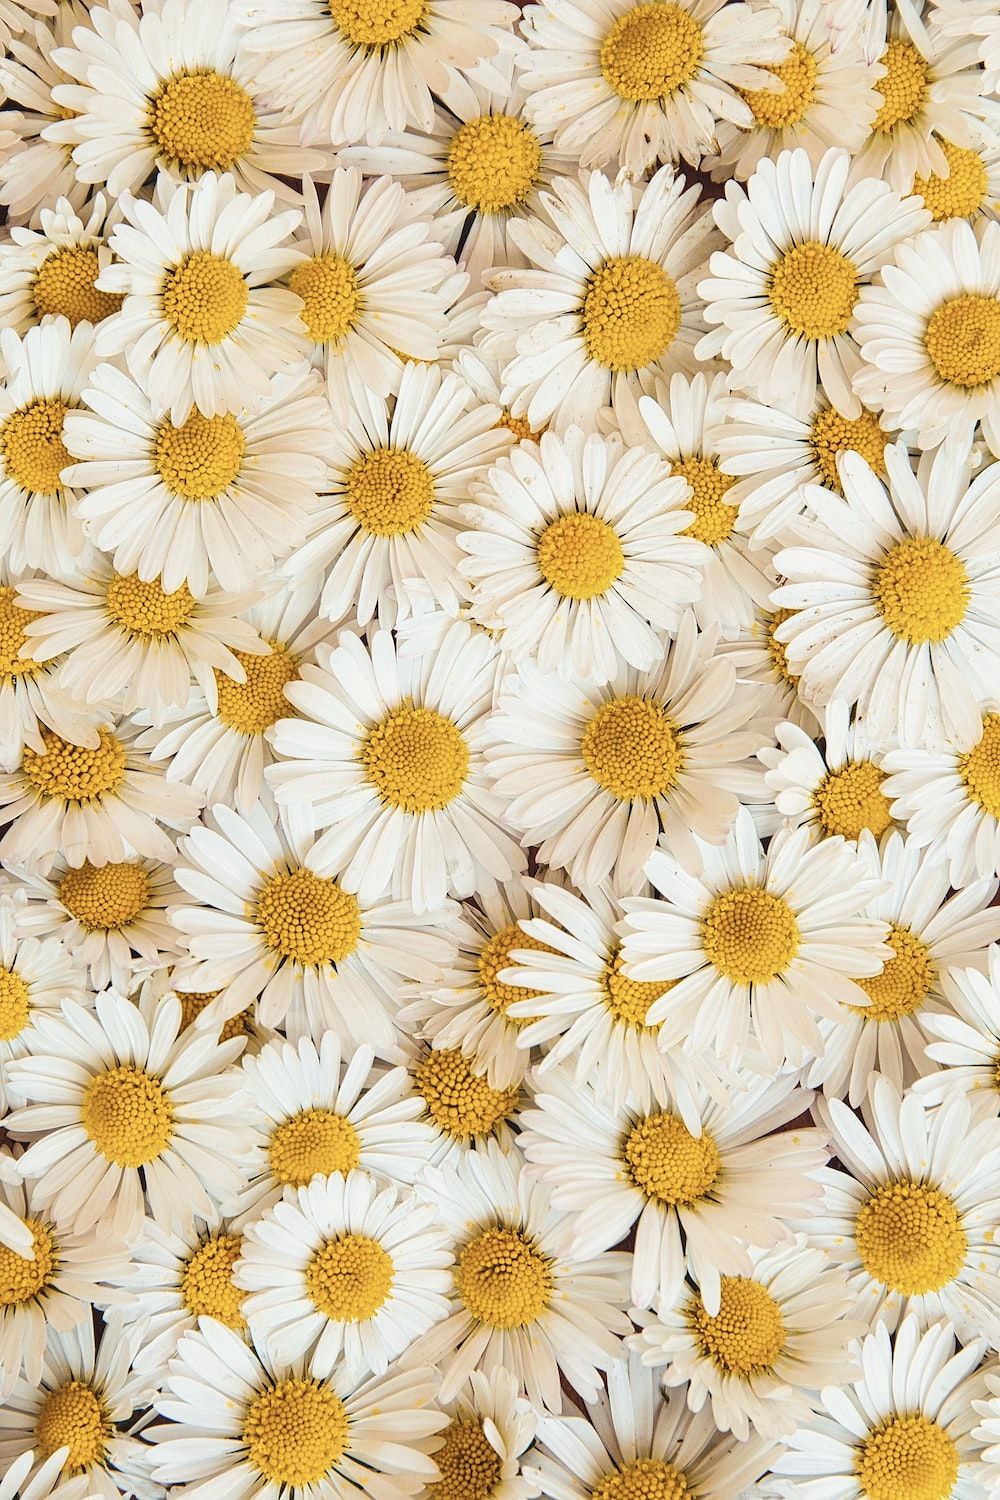 white and yellow daisy flowers photo